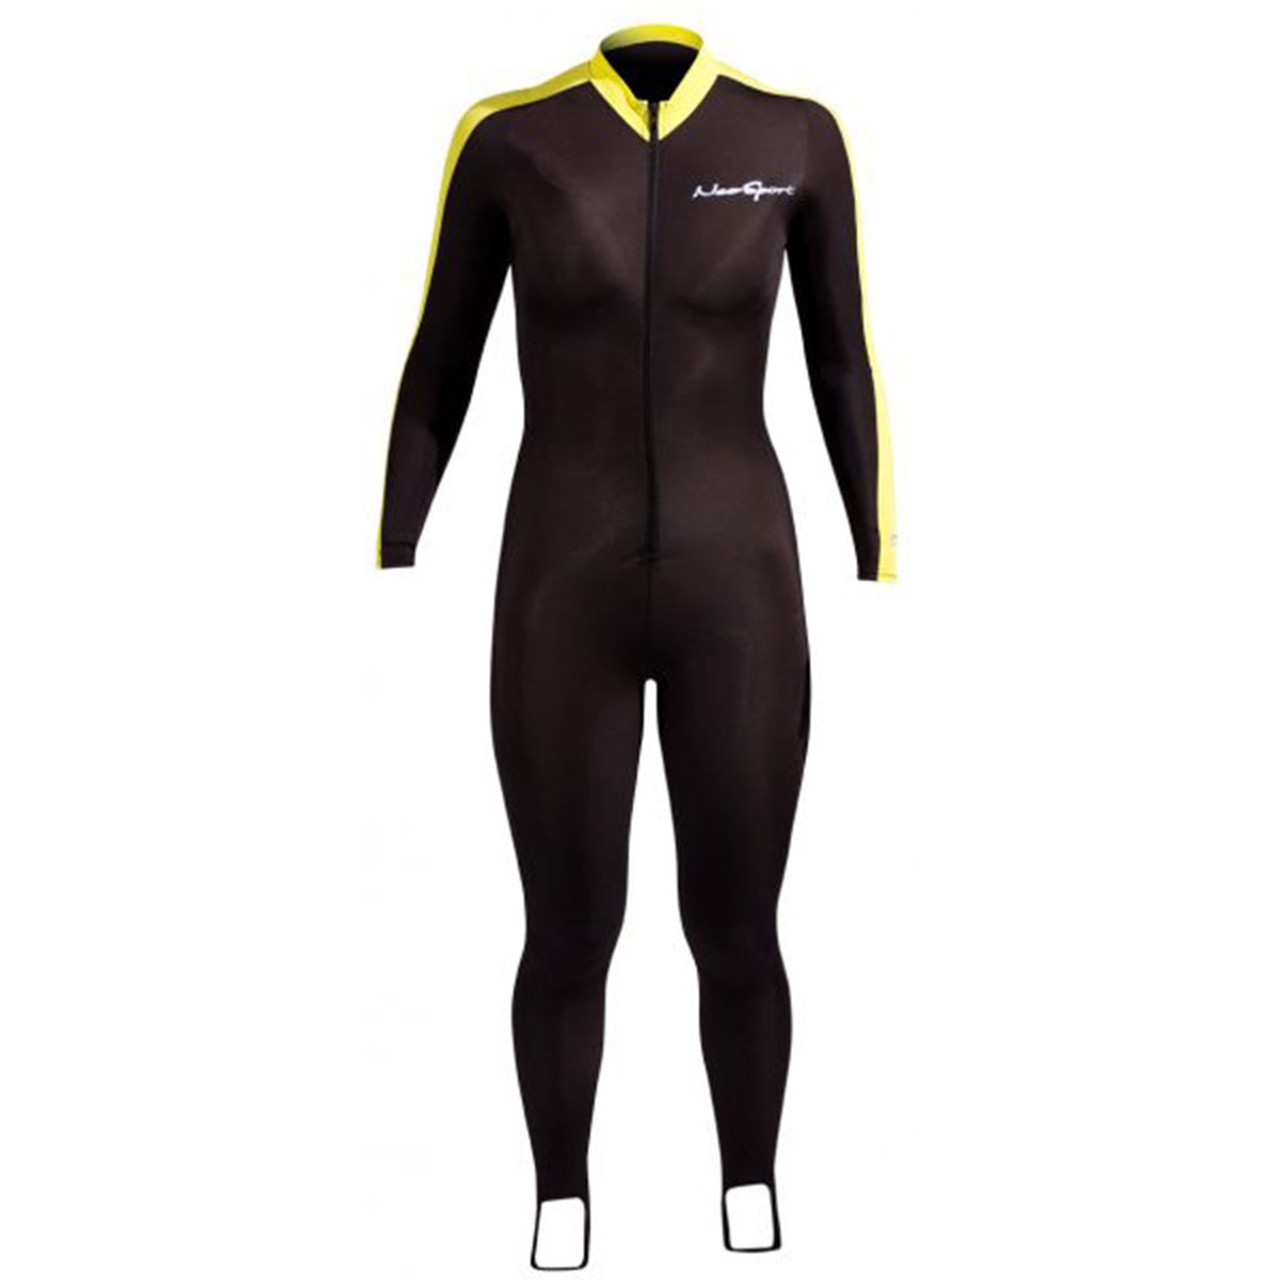 Kayaking Sportswear Lycra Material Breathable Sports Dive Skins